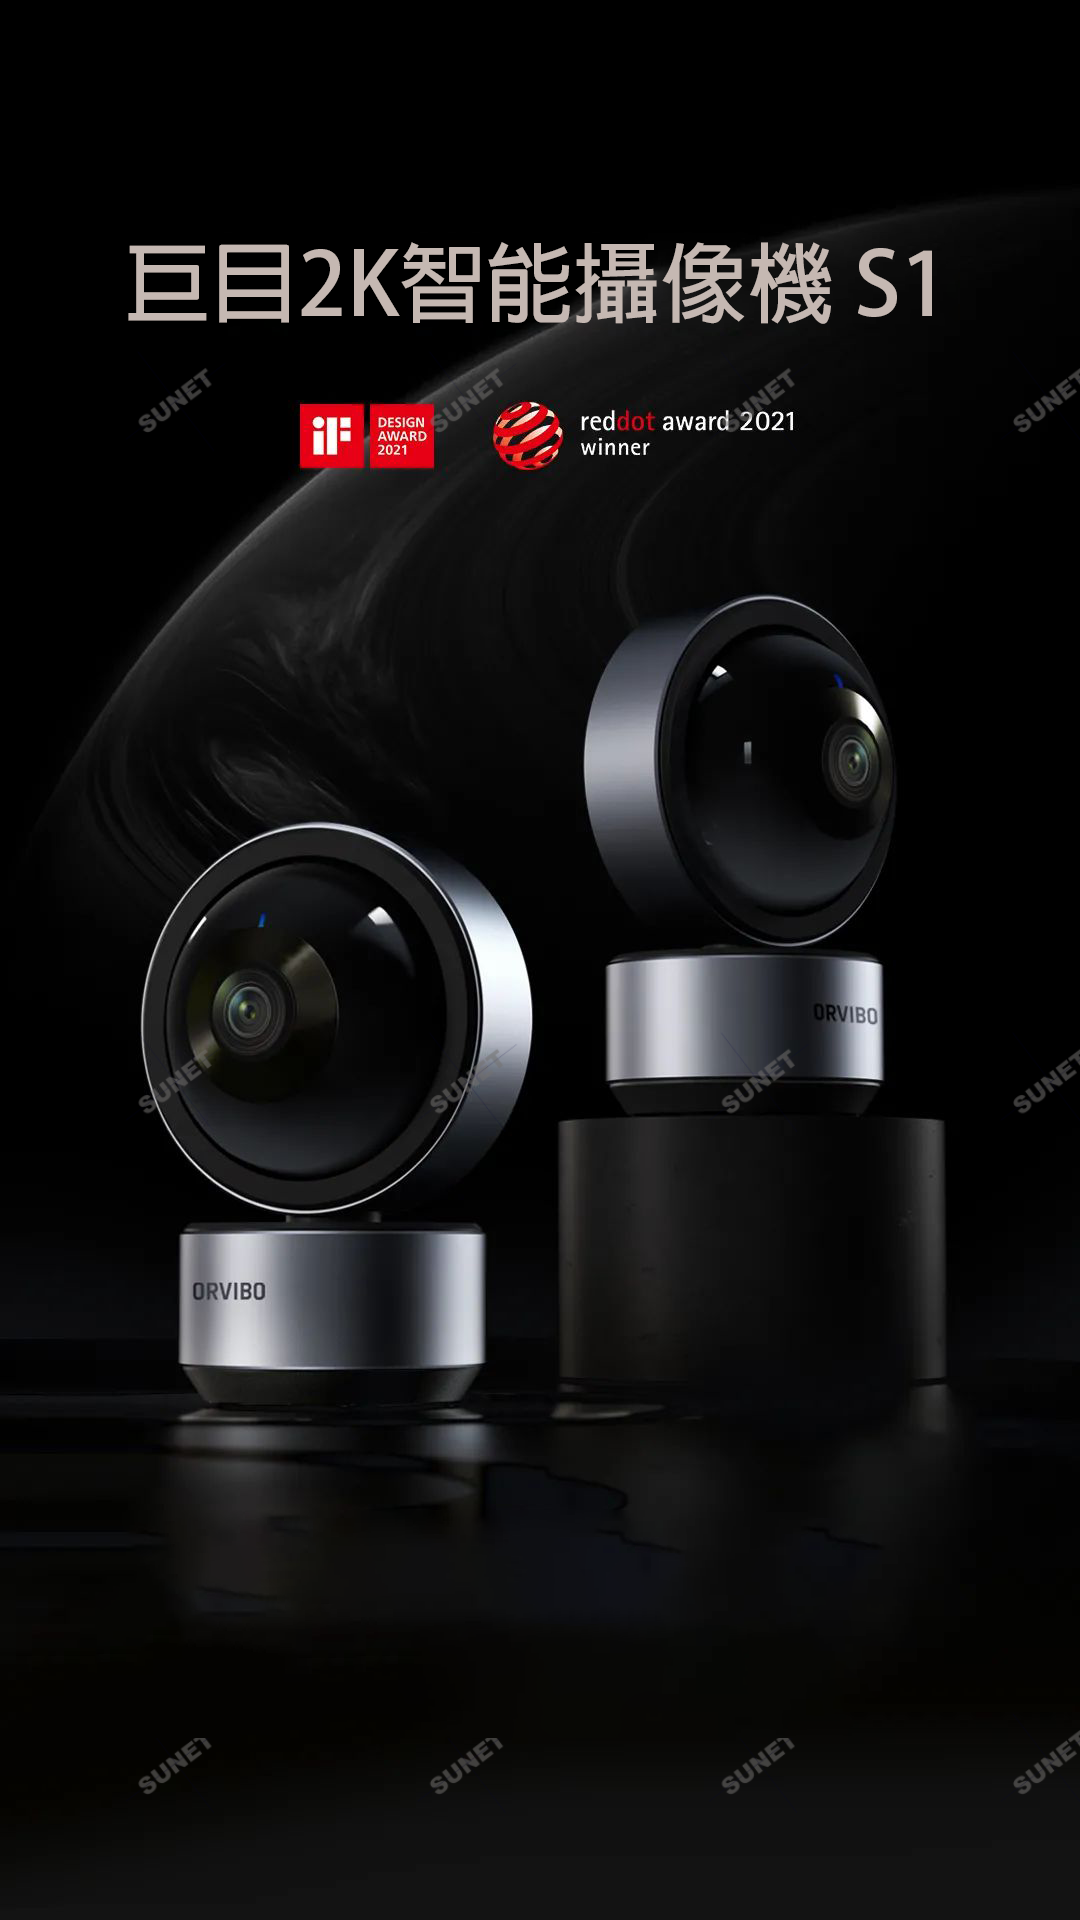 新品上市 | 巨目2K蘊美於形，嶄新視界傾心動魄, 巨目2K智能攝像機 S1                                  New product launch | Jumu 2K is beautiful in shape, and the new vision is captivating, Jumu 2K Smart Camera S1